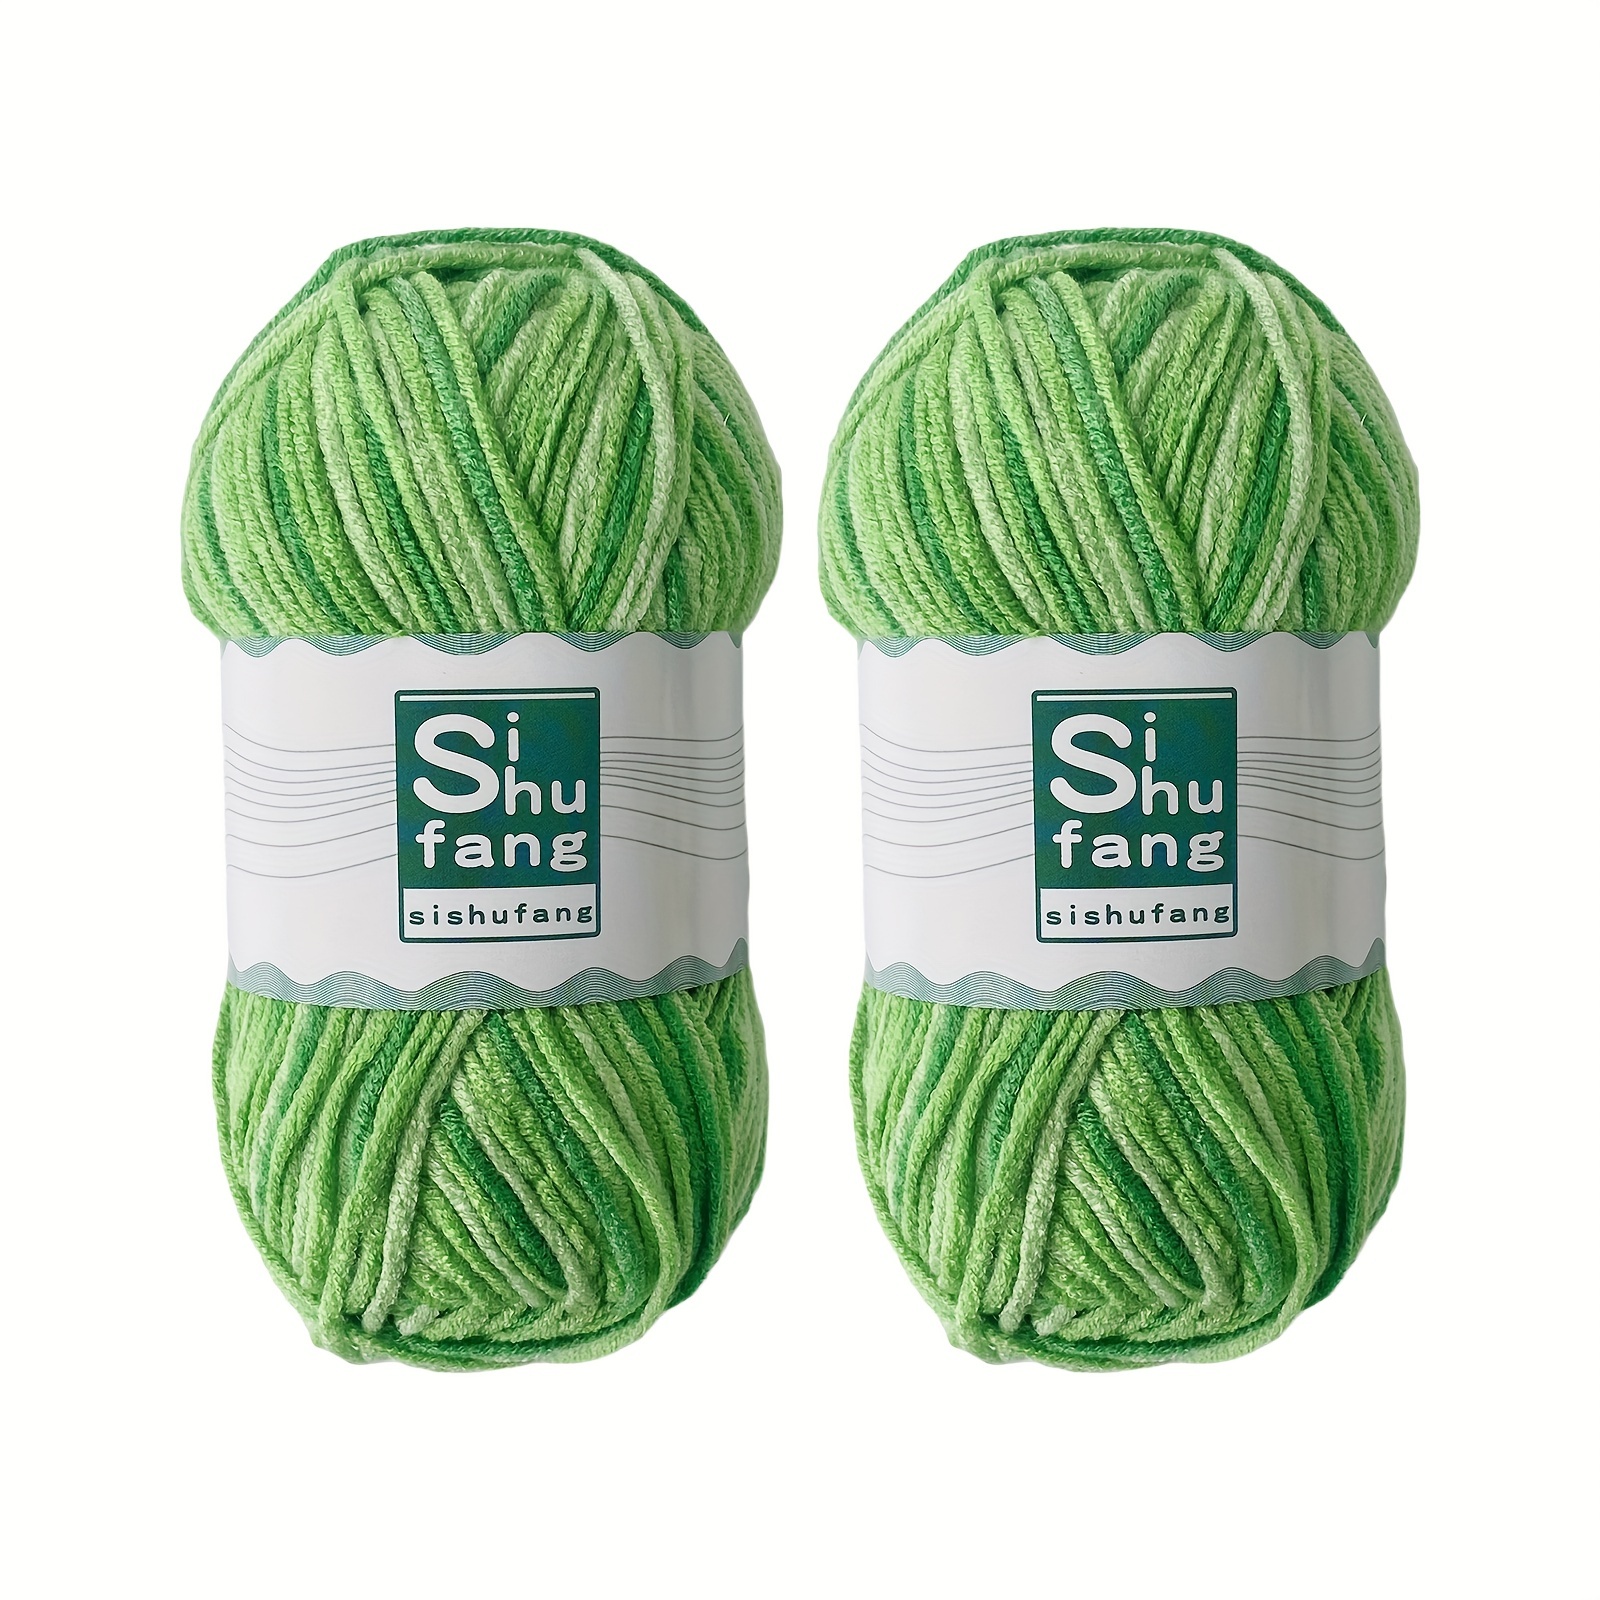 5 ply Soft Milk Cotton Yarn For Diy Kitting And Crocheting - Temu